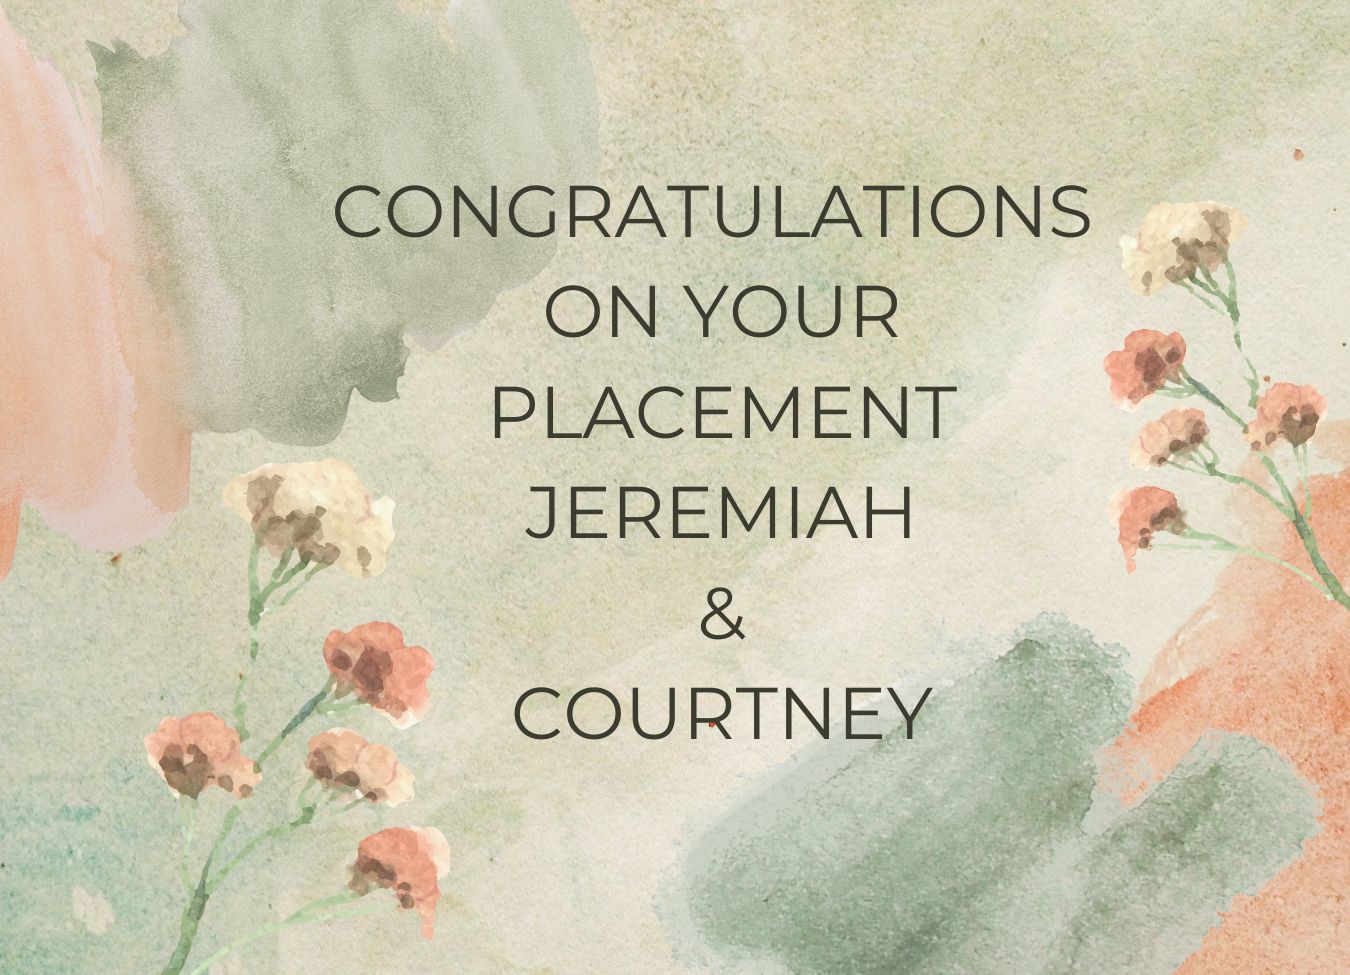 Jeremiah & Courtney